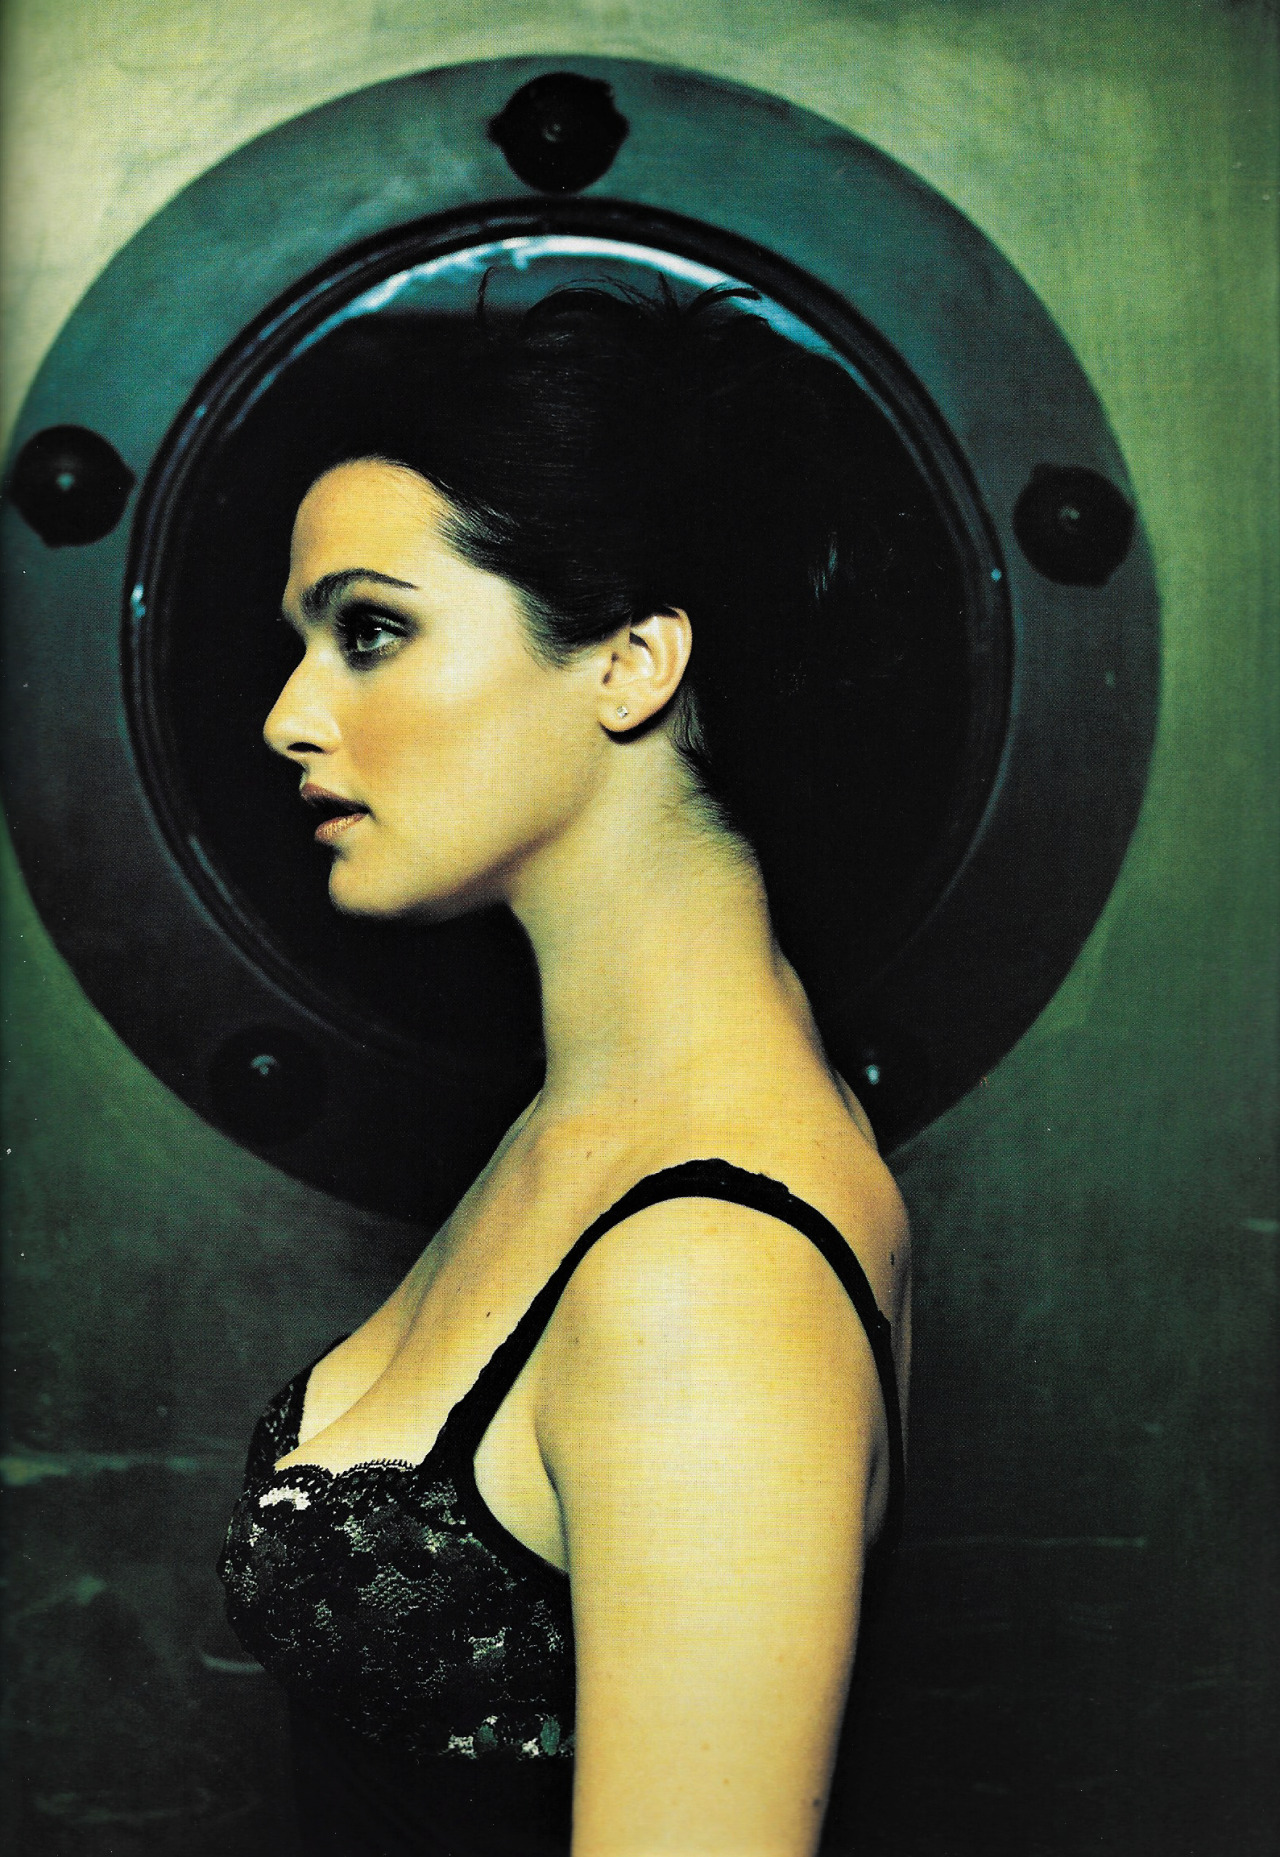 Rachel Weisz photographed by James White for Detour Magazine, November 1997.